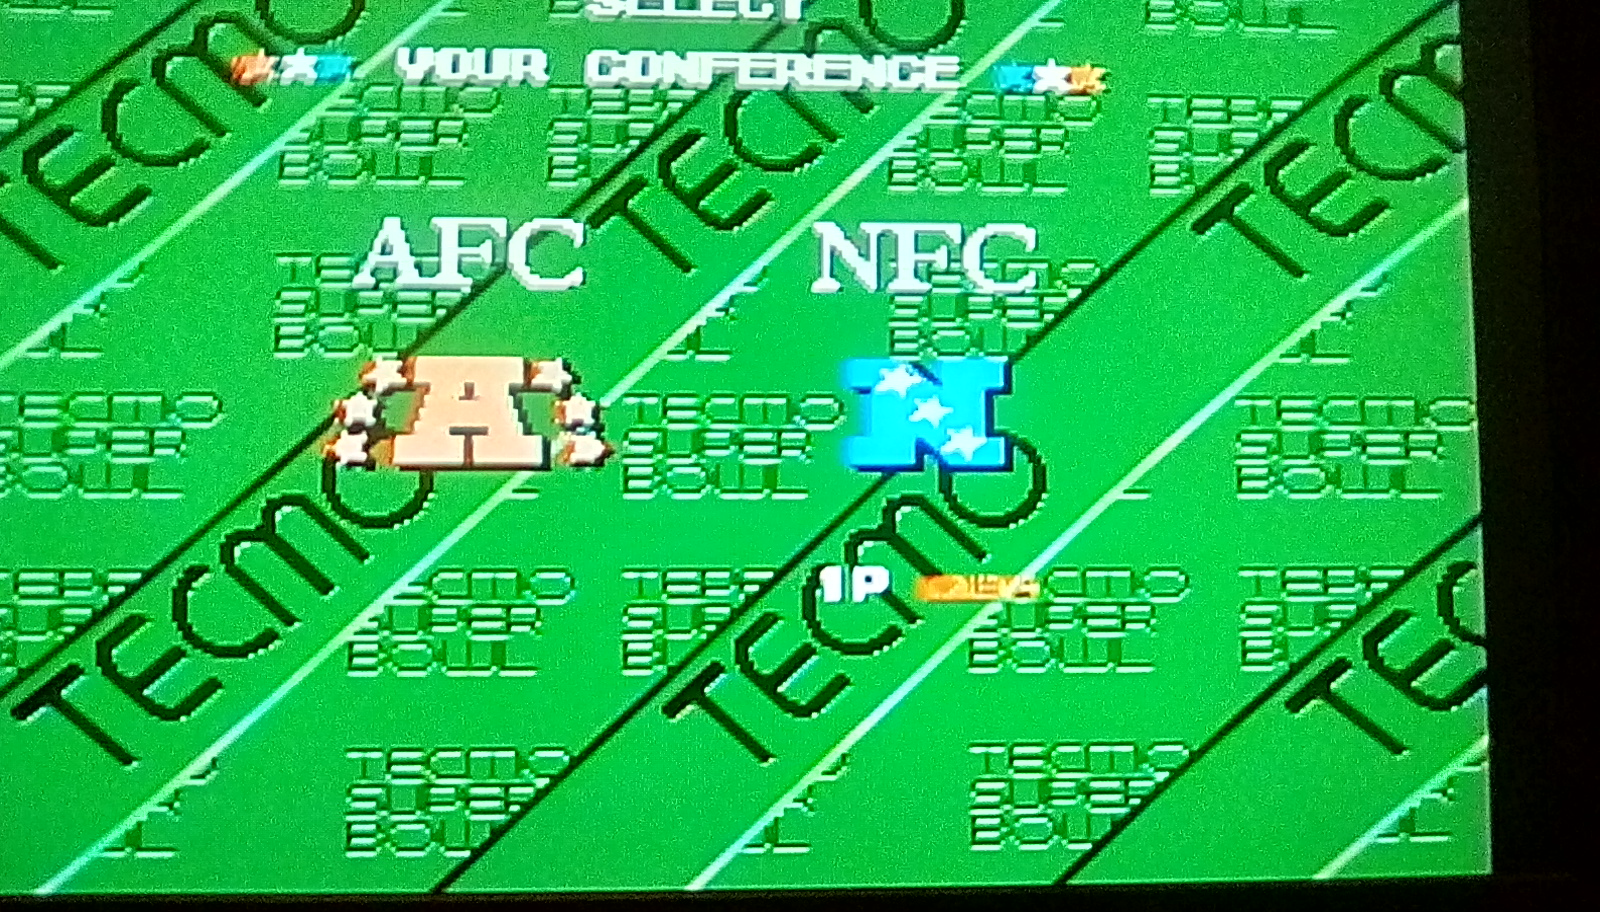 JML101582: Tecmo Super Bowl [Most Receiving Yards] [Pro Bowl] (Sega Genesis / MegaDrive Emulated) 572 points on 2019-01-19 19:11:50